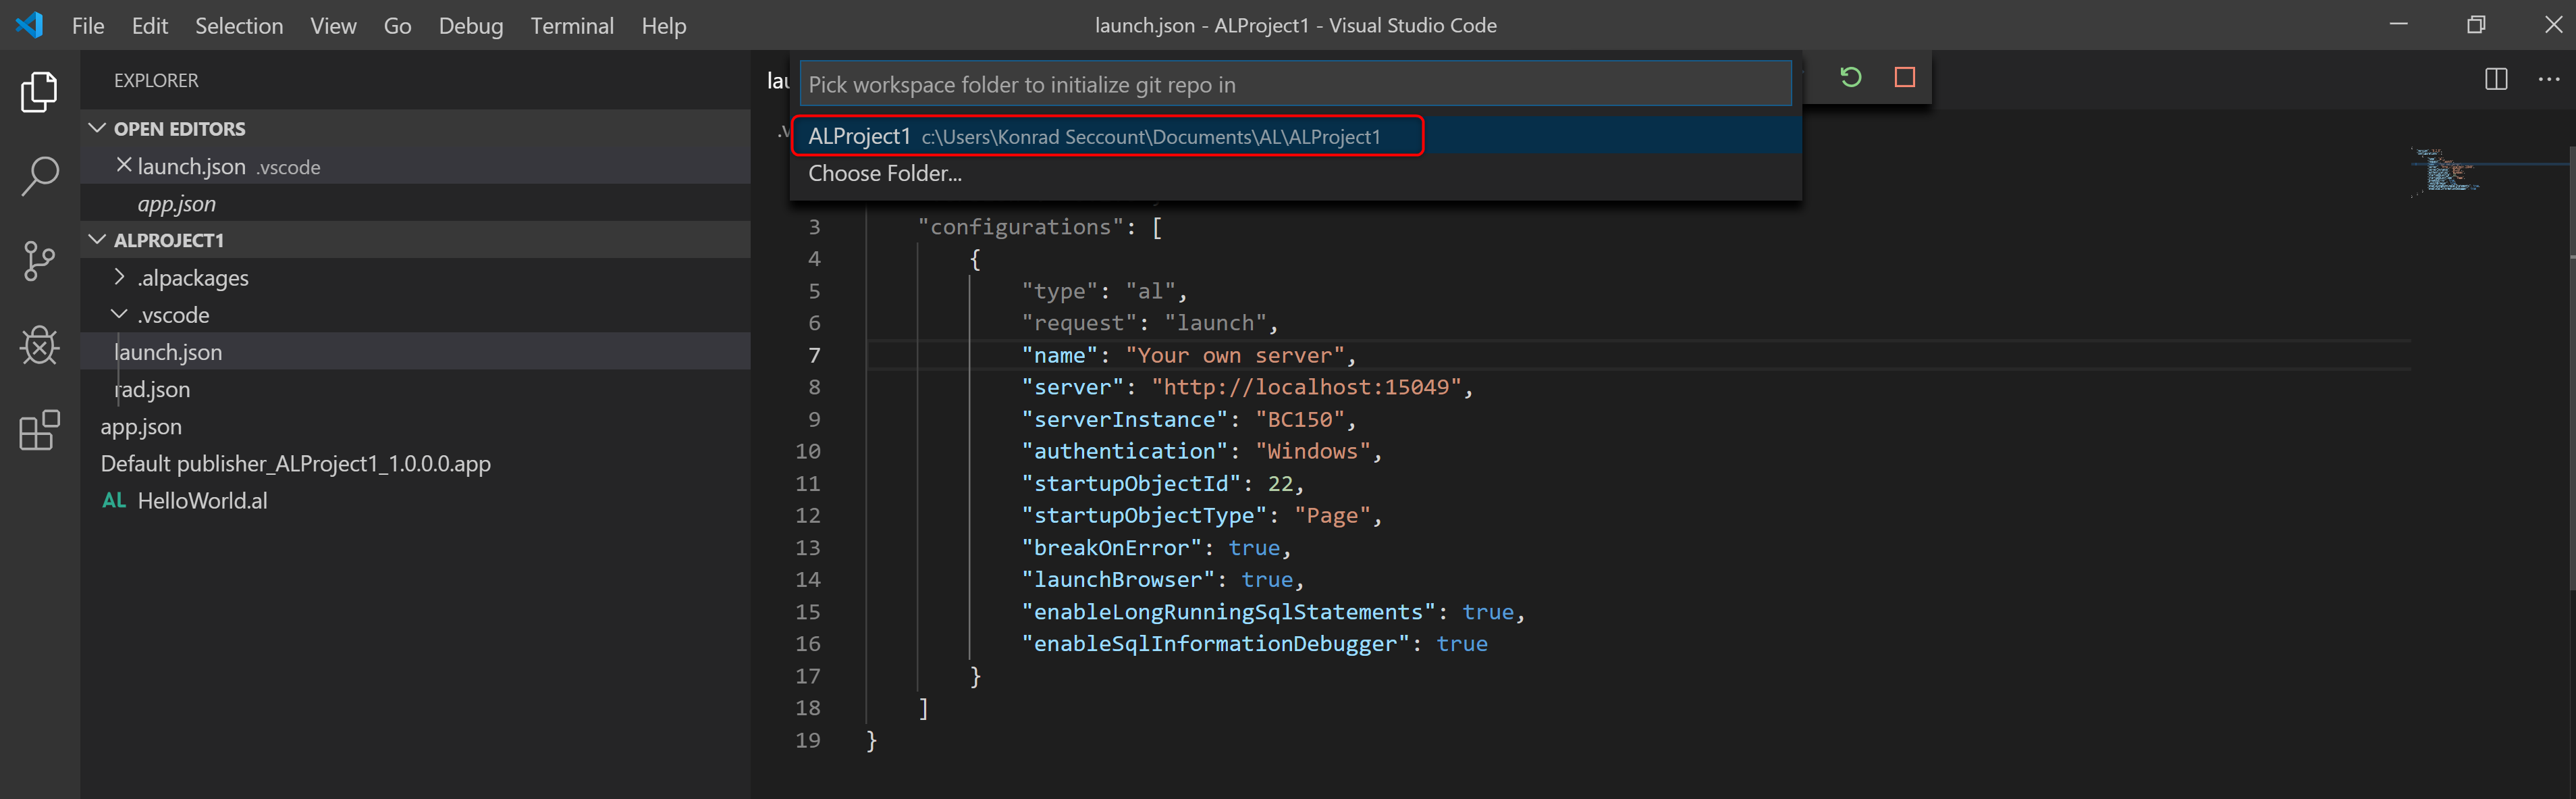 Visual Studio Code - Auswahl des Projektes zum Git repo